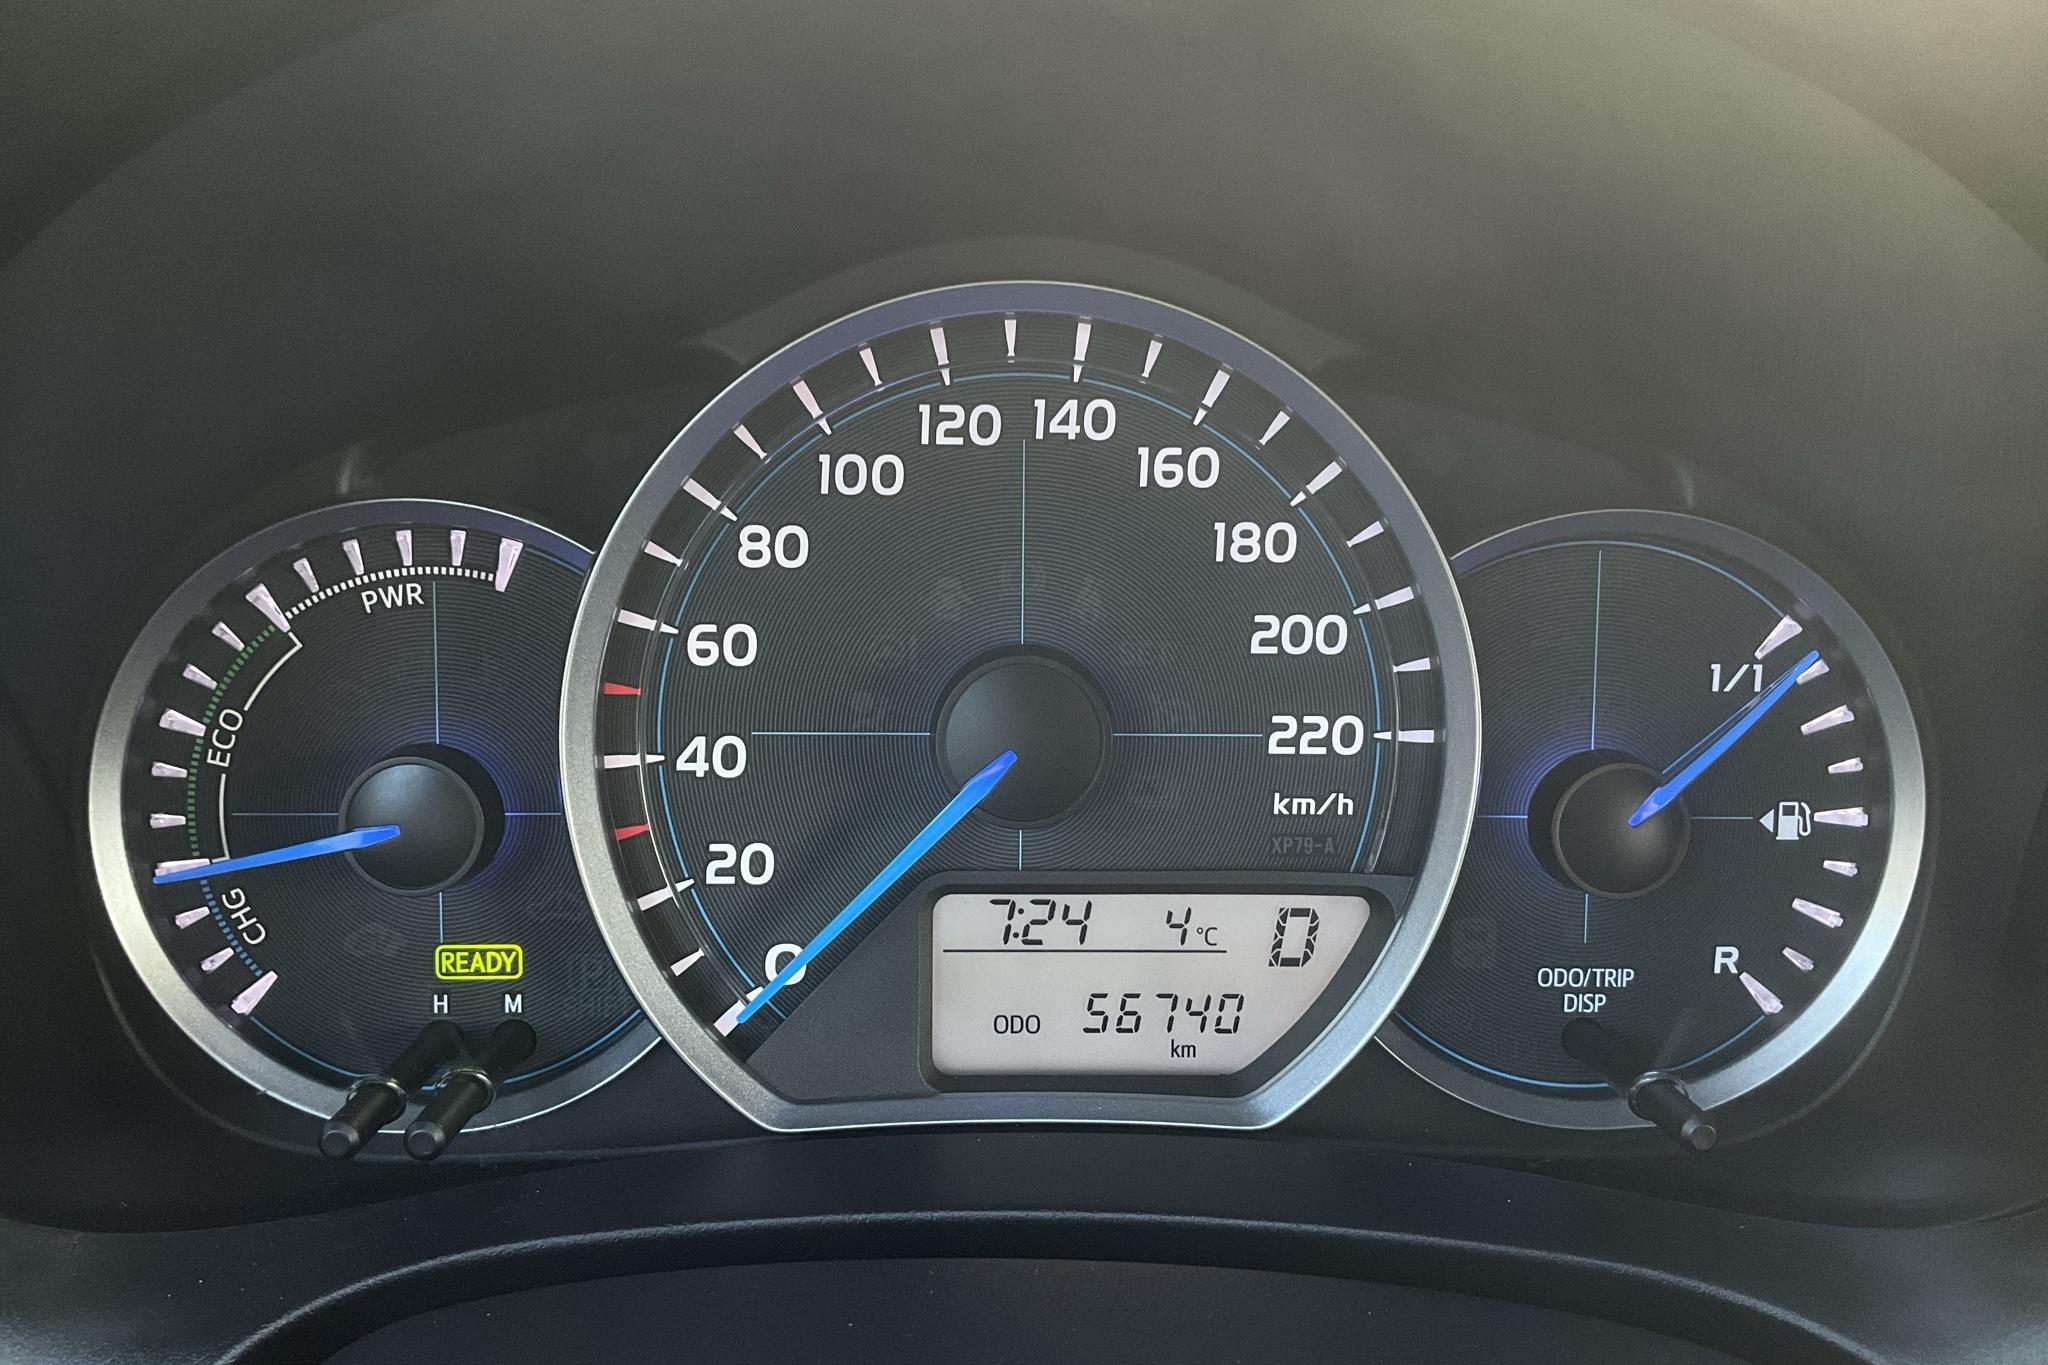 Toyota Yaris 1.5 HSD 5dr (75hk) - 5 674 mil - Automat - vit - 2014